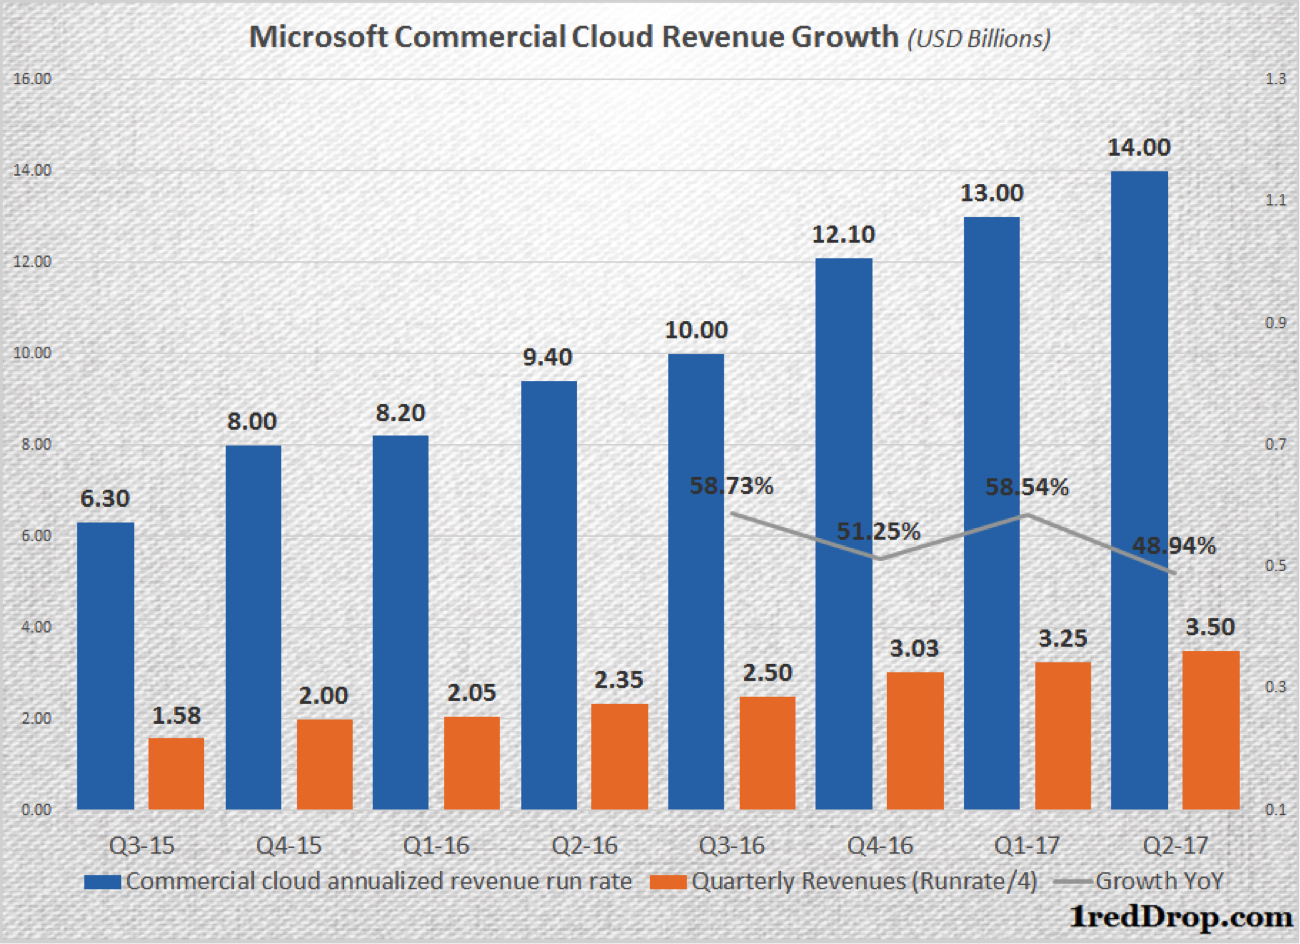 Microsoft commercial cloud revenue growth rate